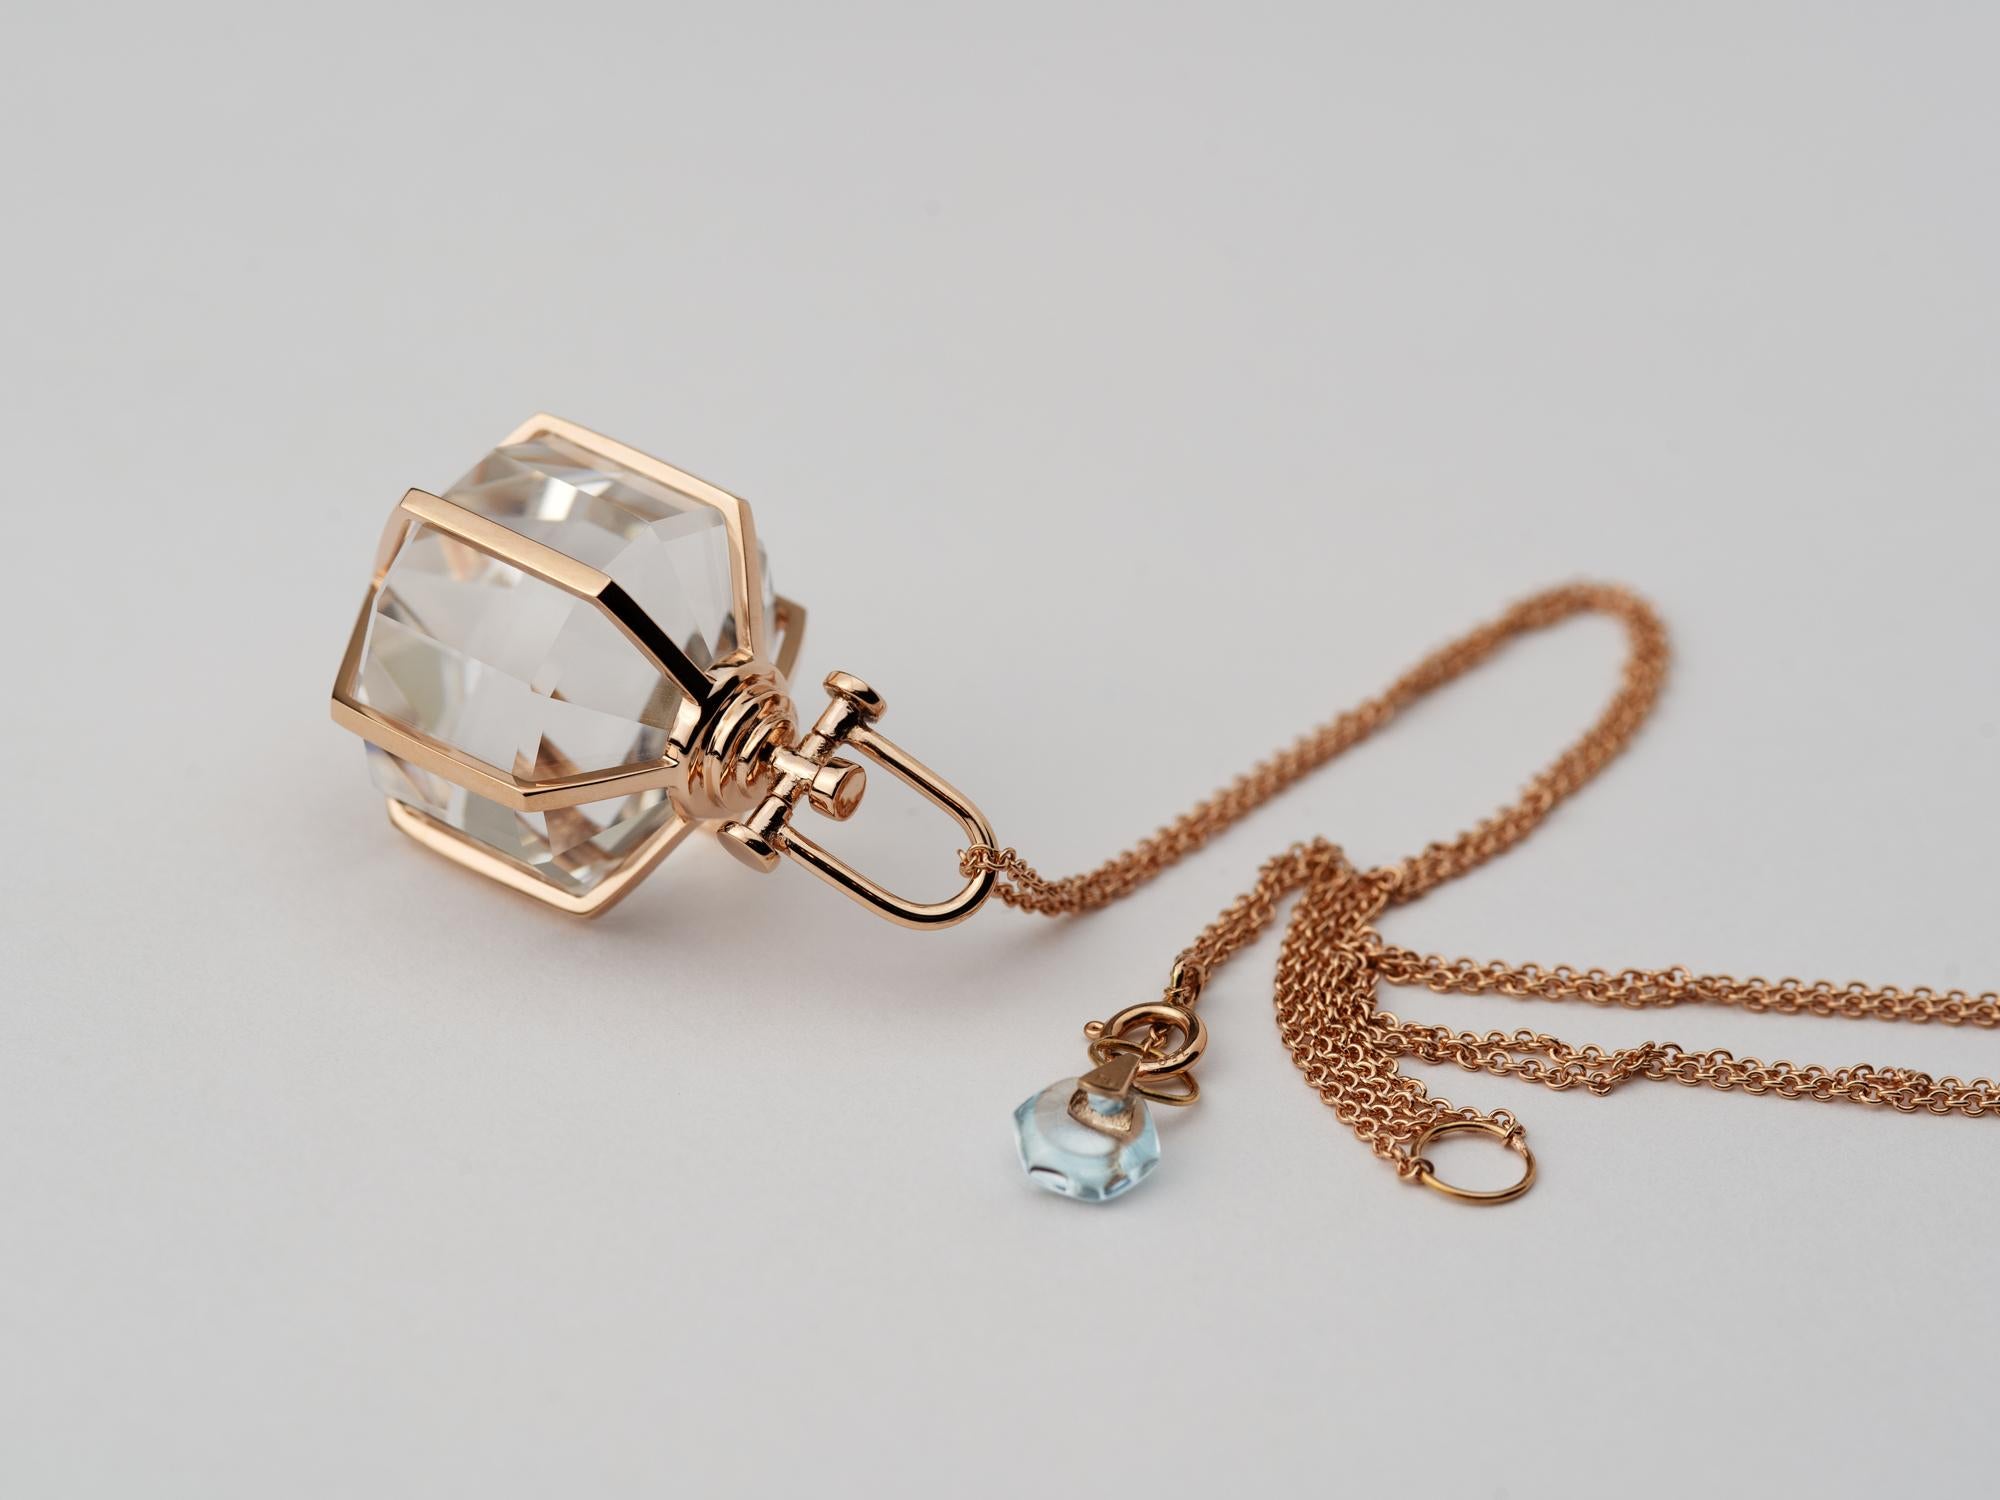 Rebecca Li Six Senses Talisman Necklace 18 Karat Gold Large Natural Rock Crystal 1